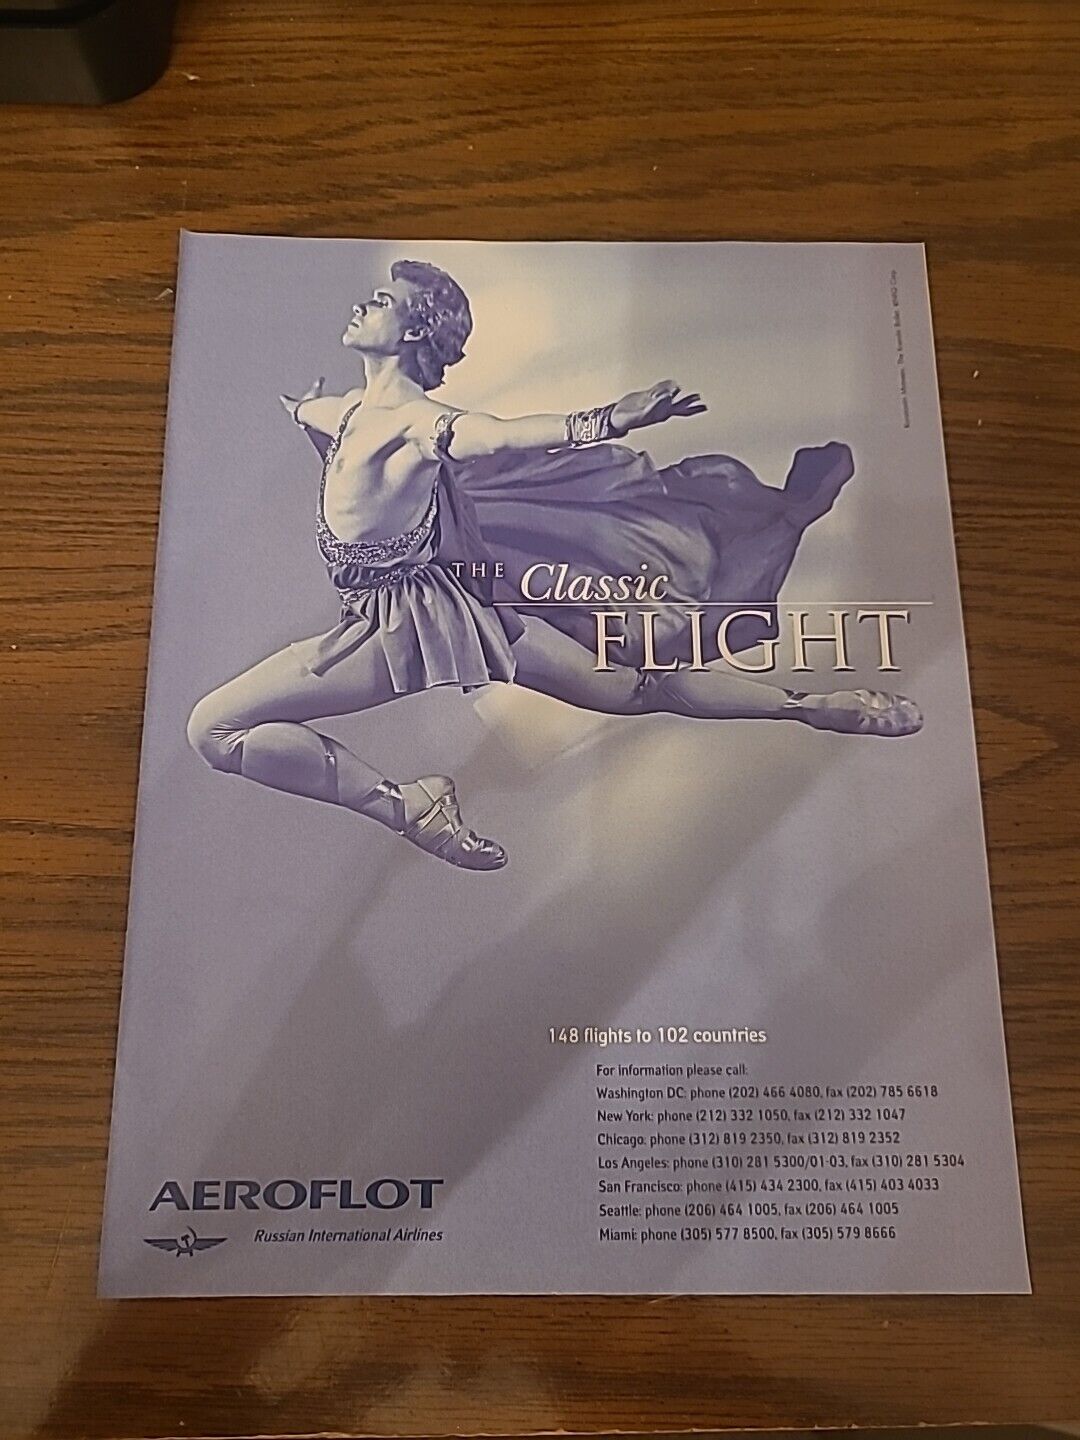 Aeroflot Print Ad 1996 8x11 Russian International Airlines The Classic Flight 